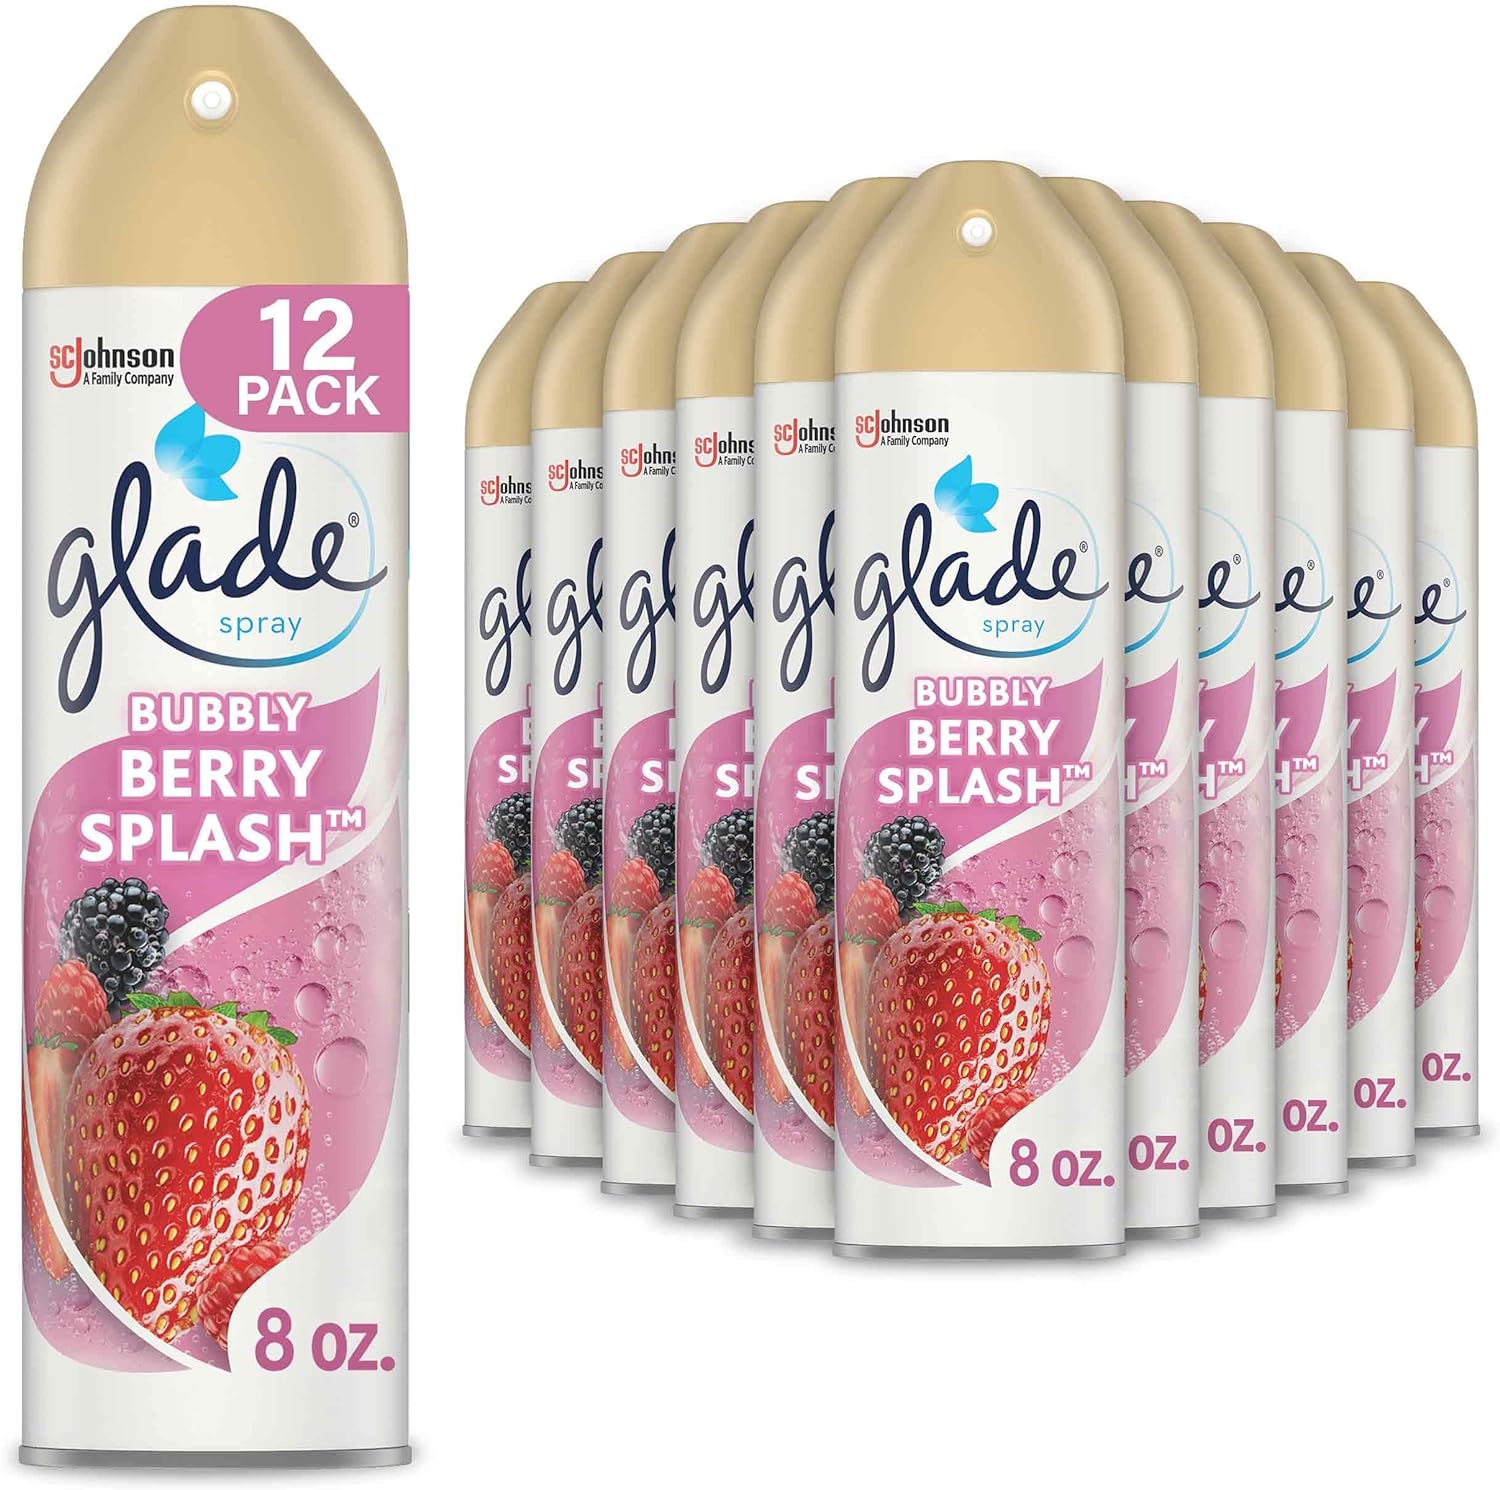 Glade Air Freshener, Room Spray, Bubbly Berry Splash, 8 Oz, 12 Count